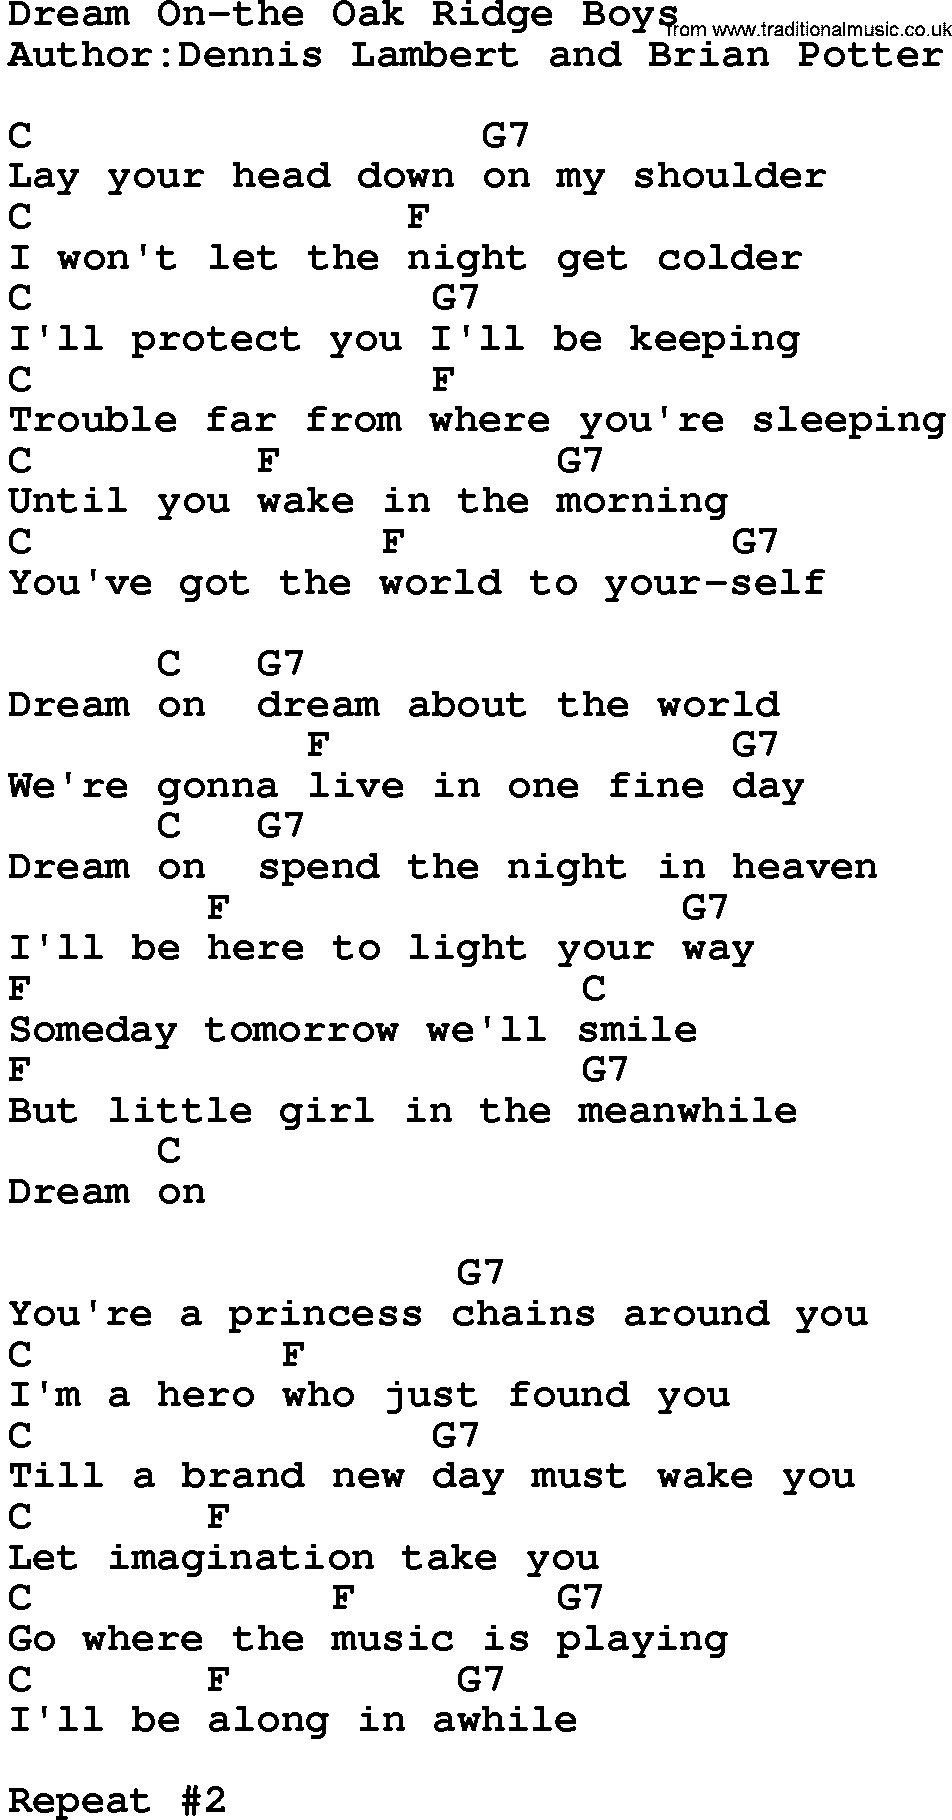 Country music song: Dream On-The Oak Ridge Boys lyrics and chords